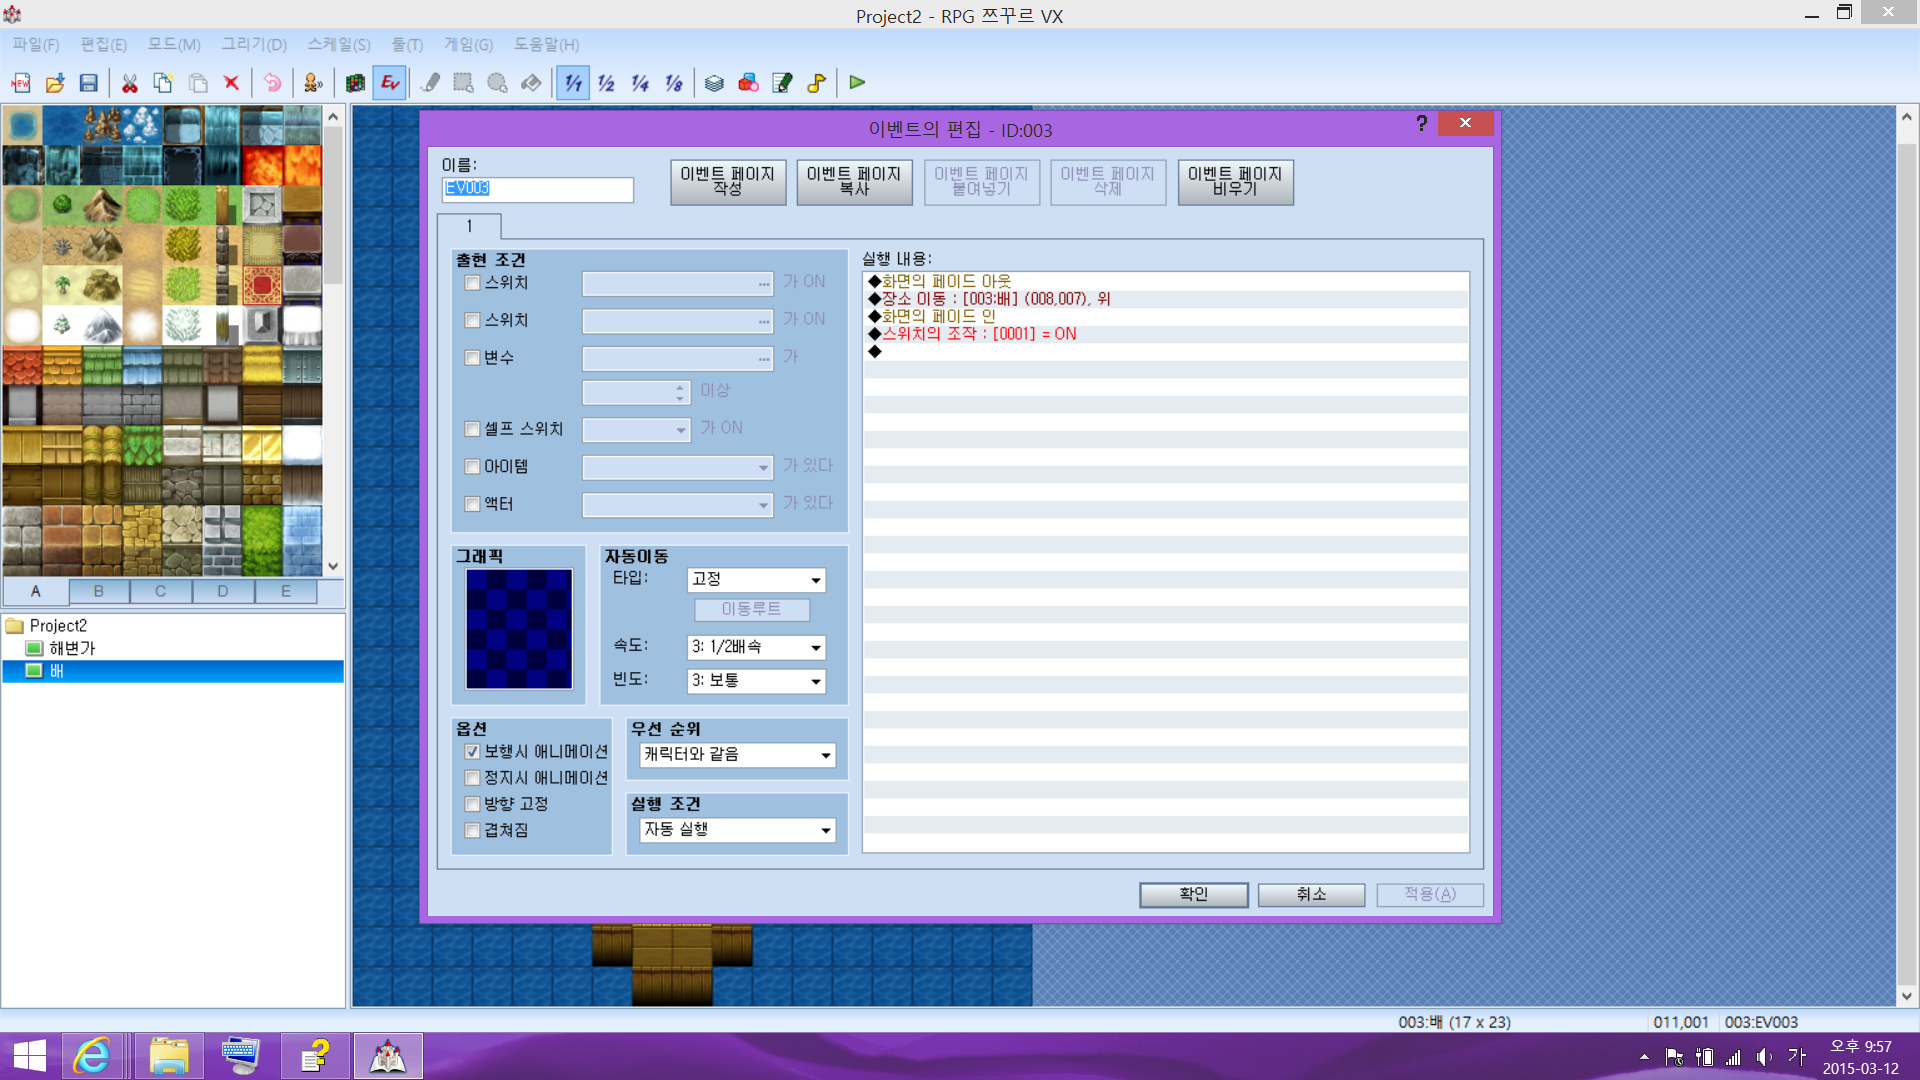 RPGMVX Screenshot1.png